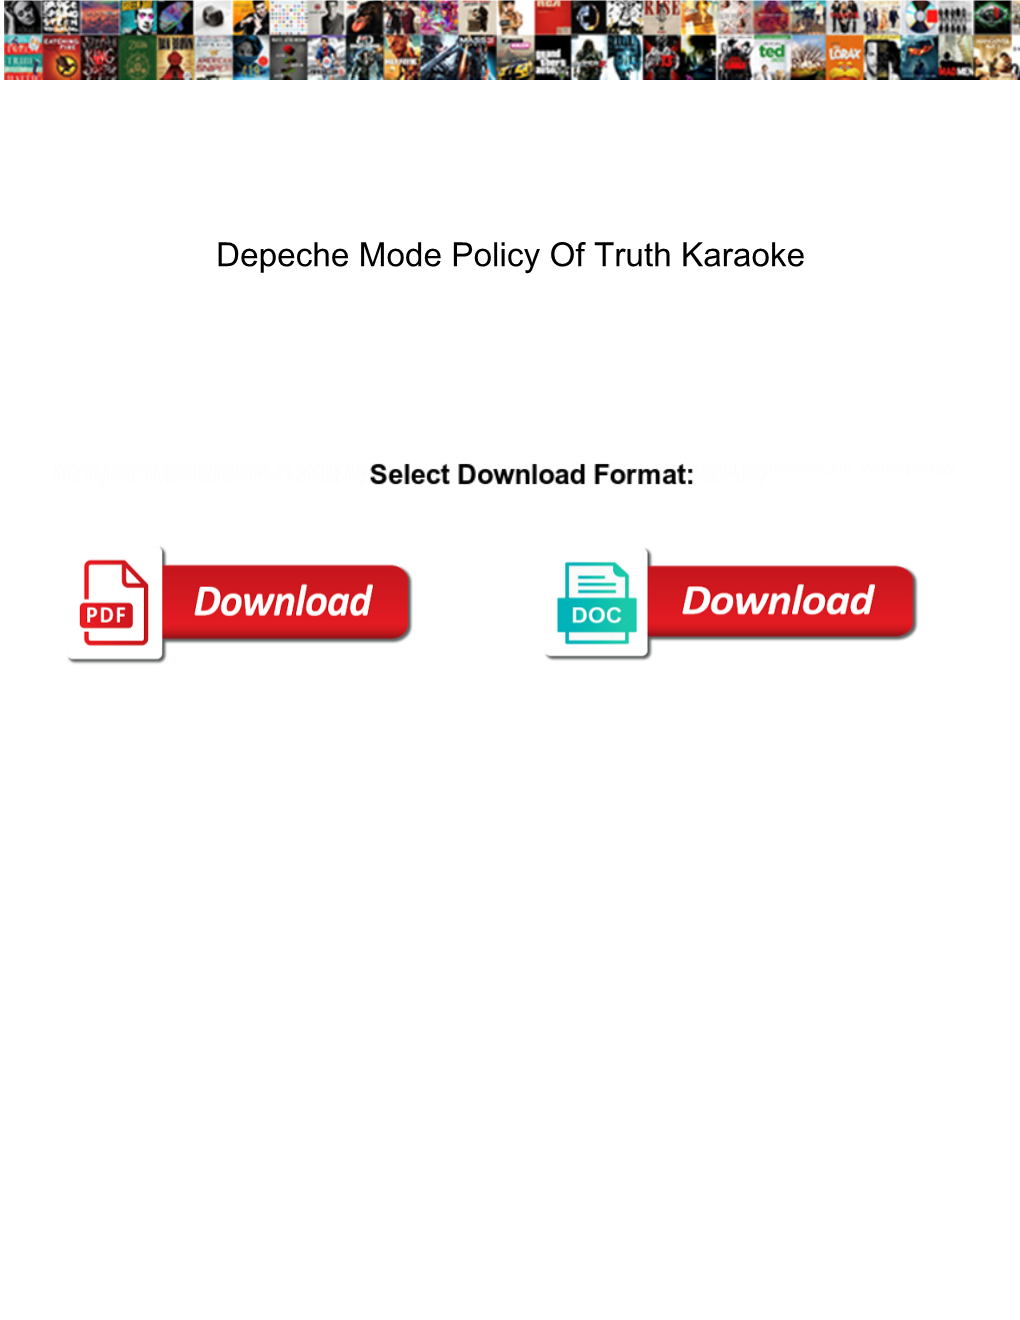 Depeche Mode Policy of Truth Karaoke